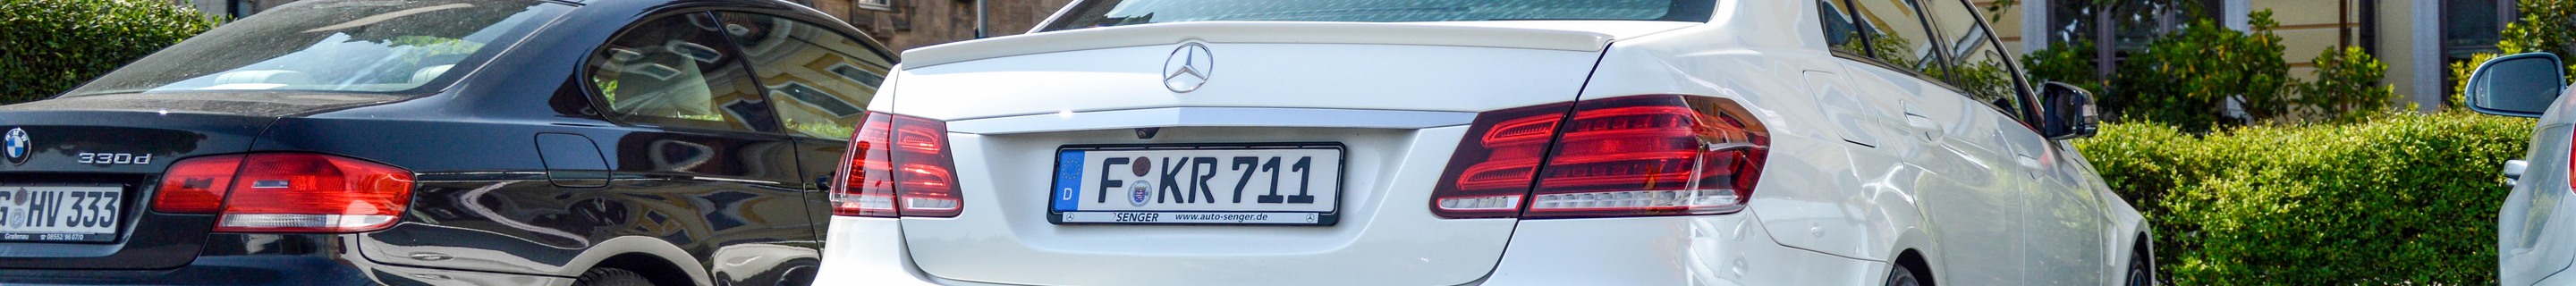 Mercedes-Benz E 63 AMG S W212